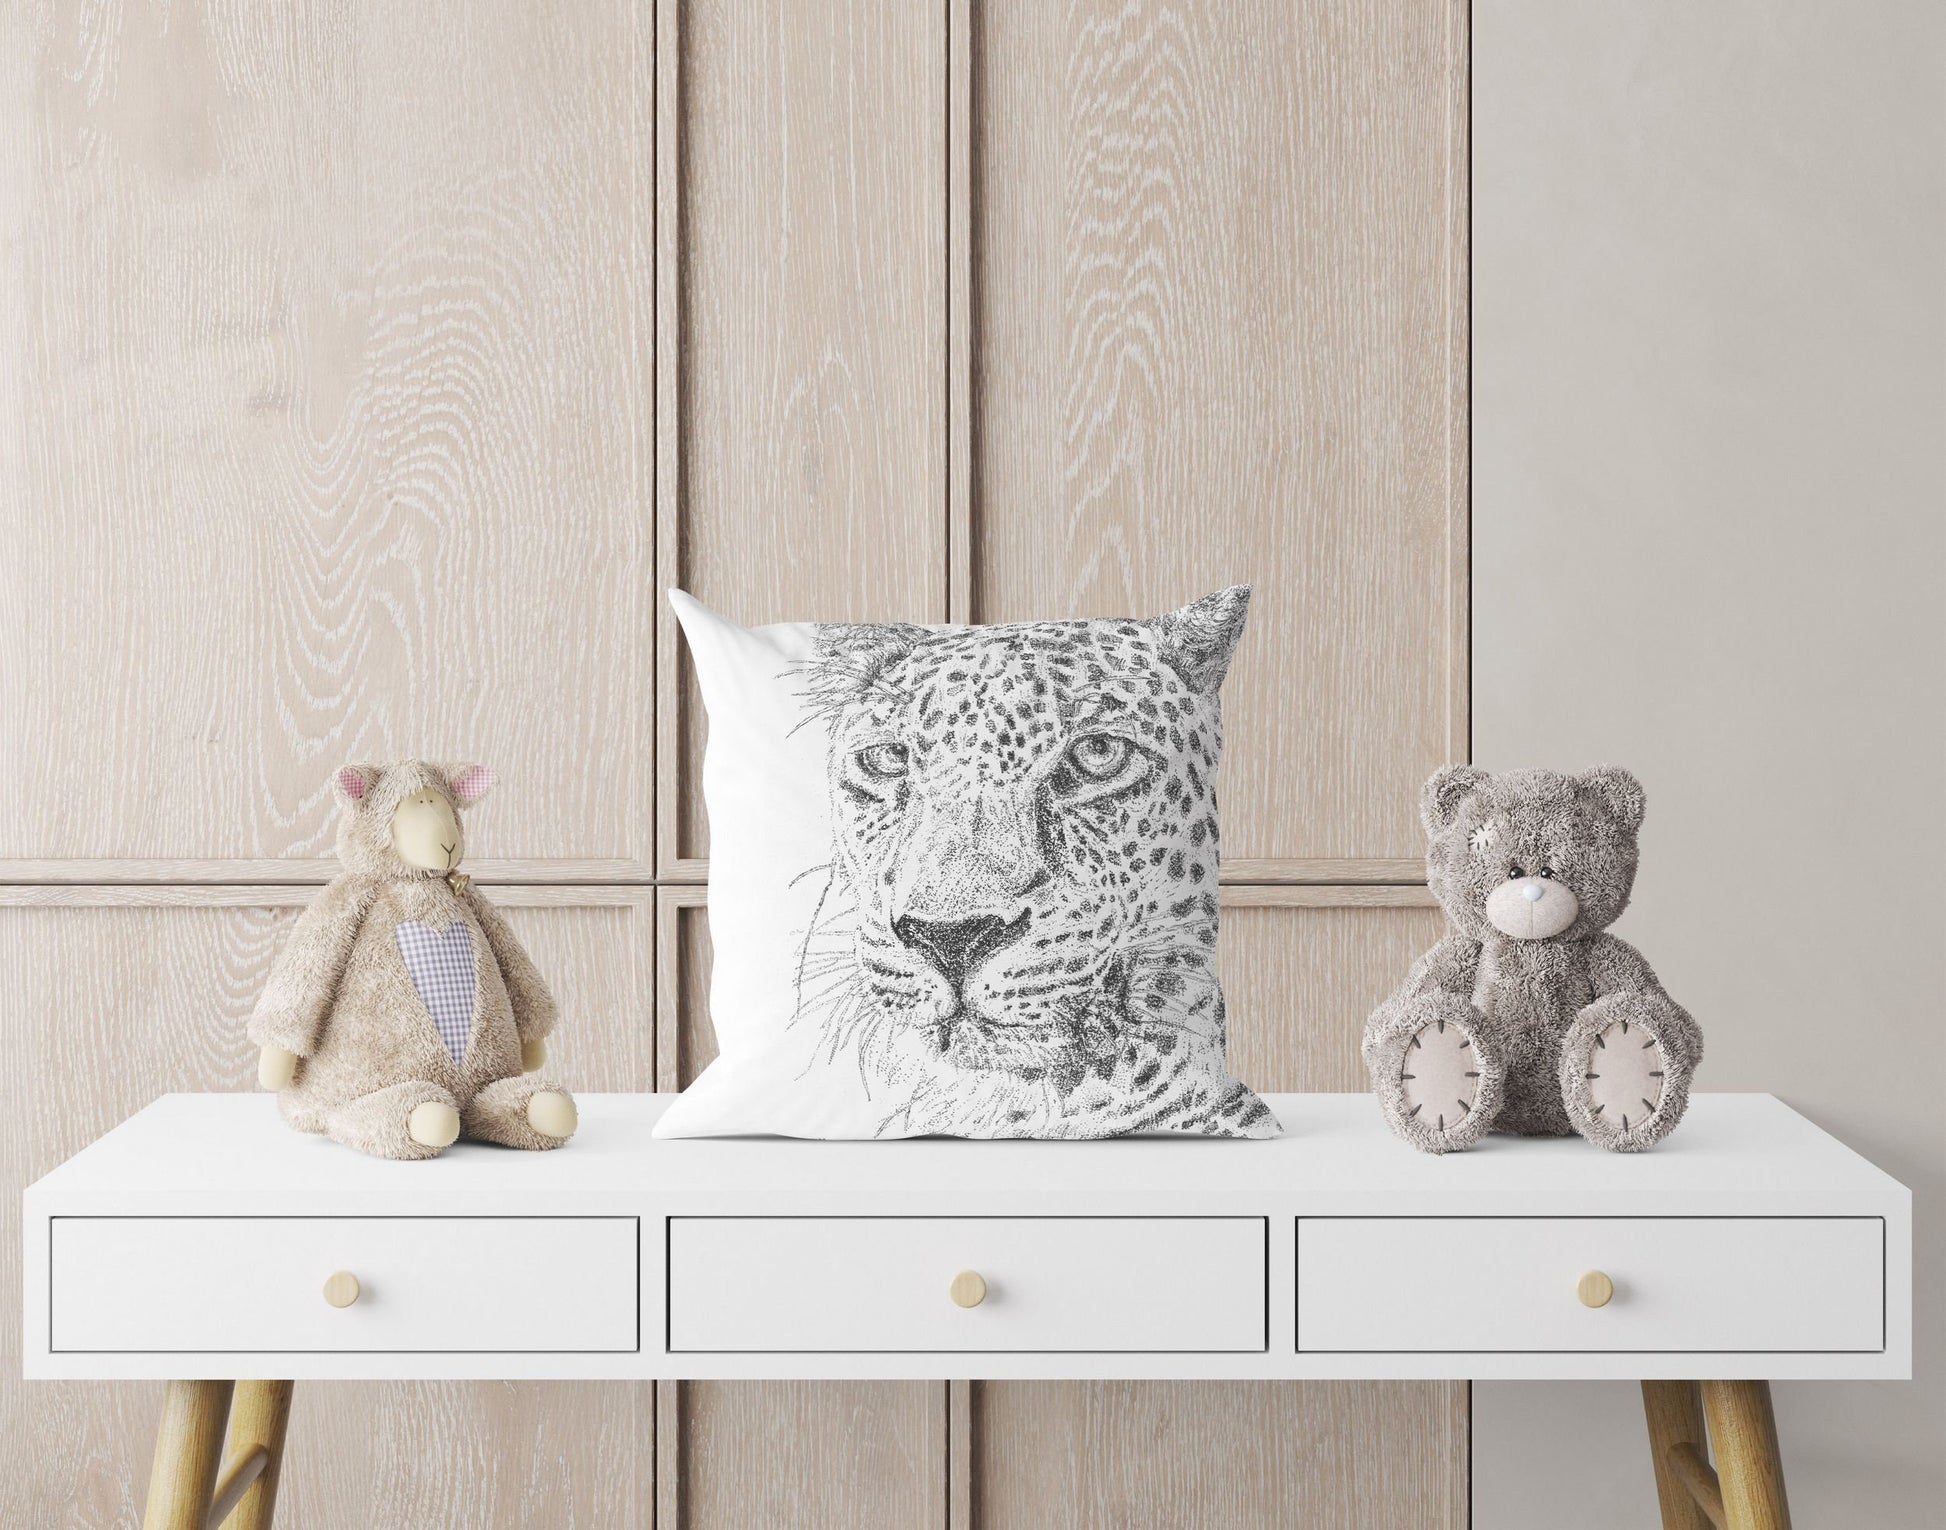 Leopard Big Cat Wildlife Throw Pillow Cover, Animal Pillow, Artist Pillow, Black White Pillow, Housewarming Gift, Indoor Pillow Cases